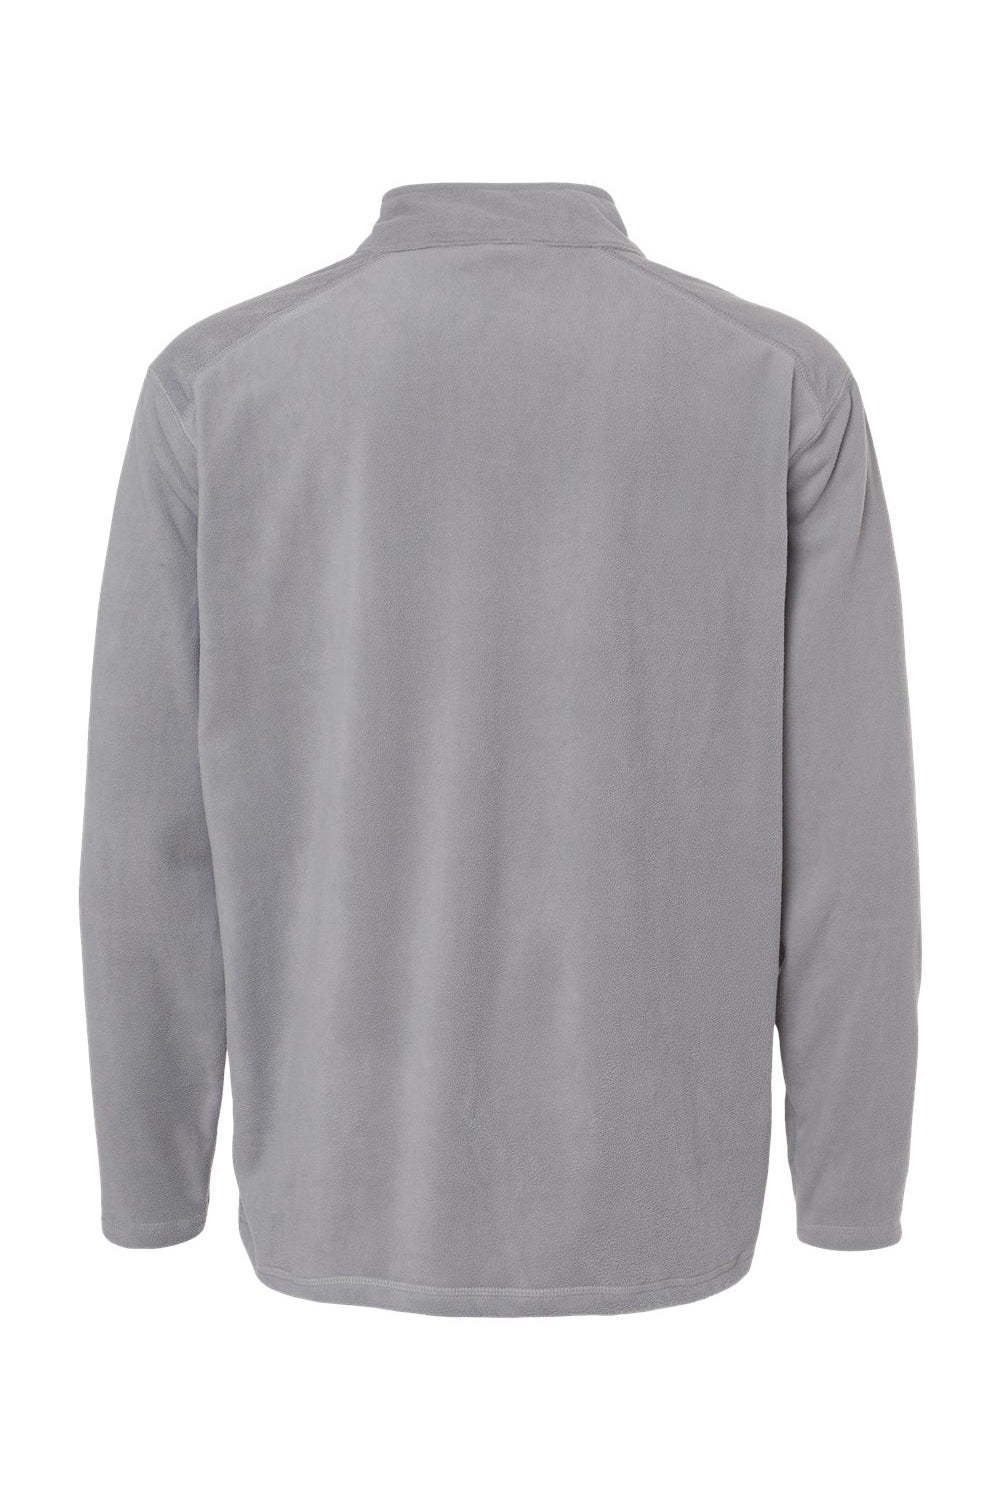 Augusta Sportswear 6863 Mens Eco Revive Micro Lite Fleece 1/4 Zip Pullover Athletic Grey Flat Back